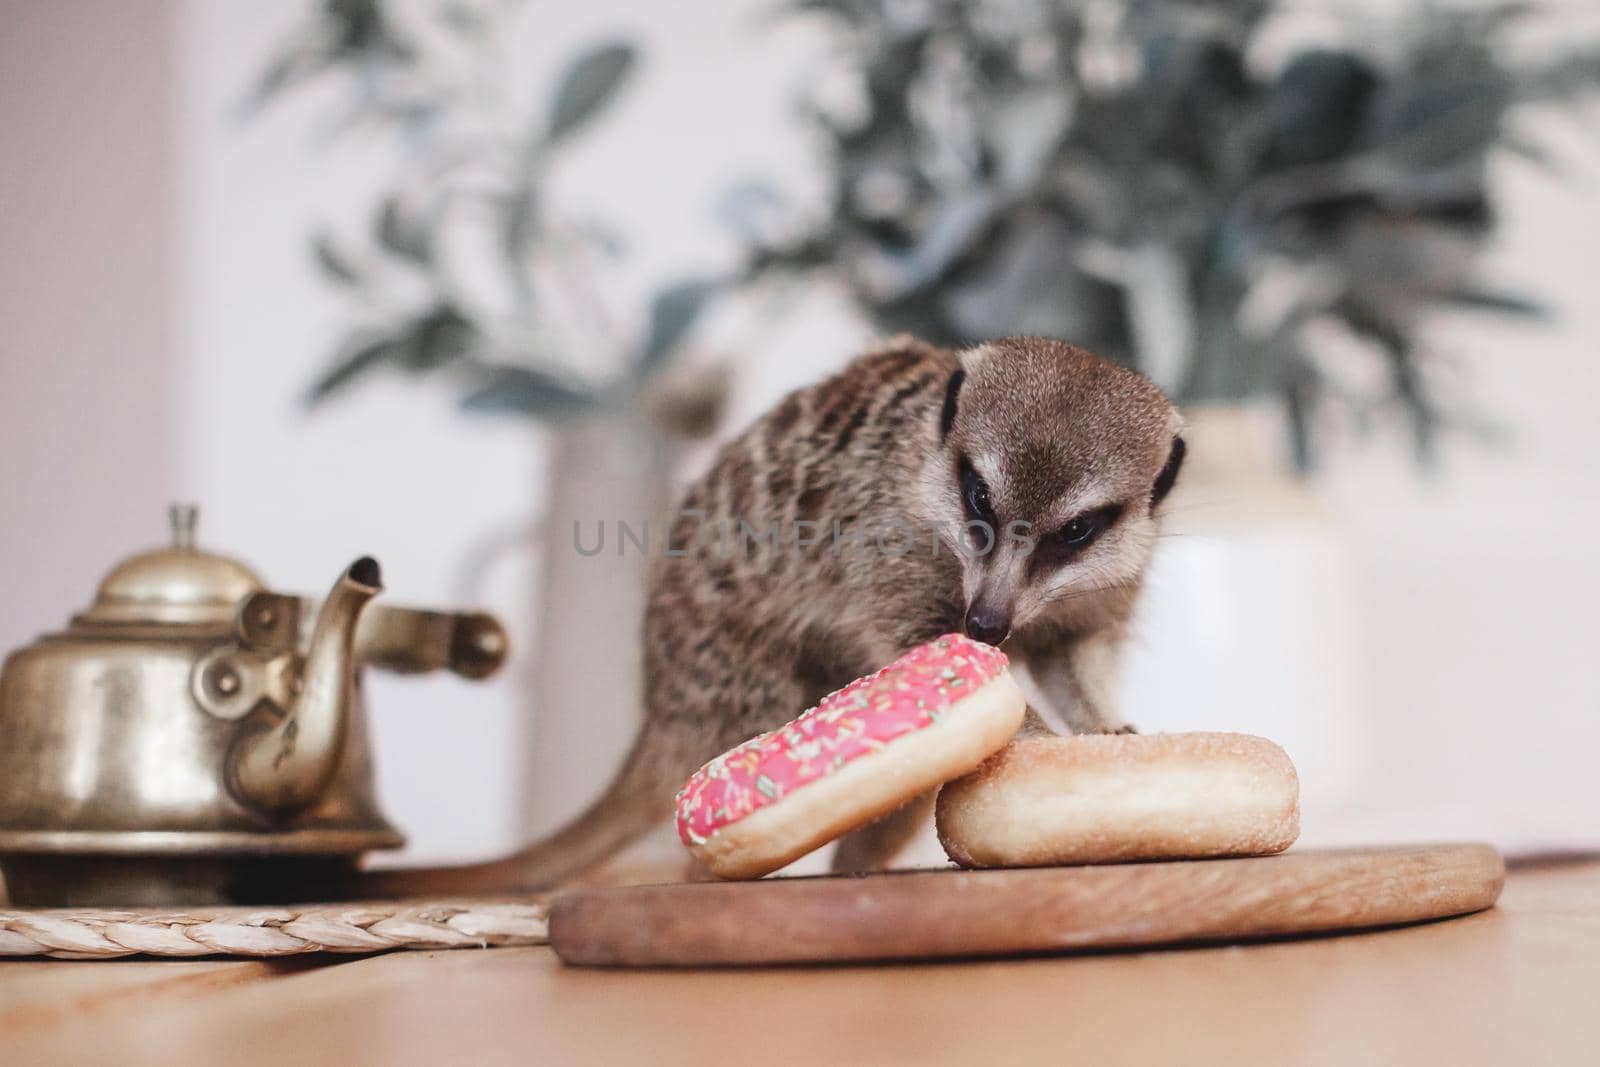 The meerkat or suricate, Suricata suricatta, eating sweets and donuts